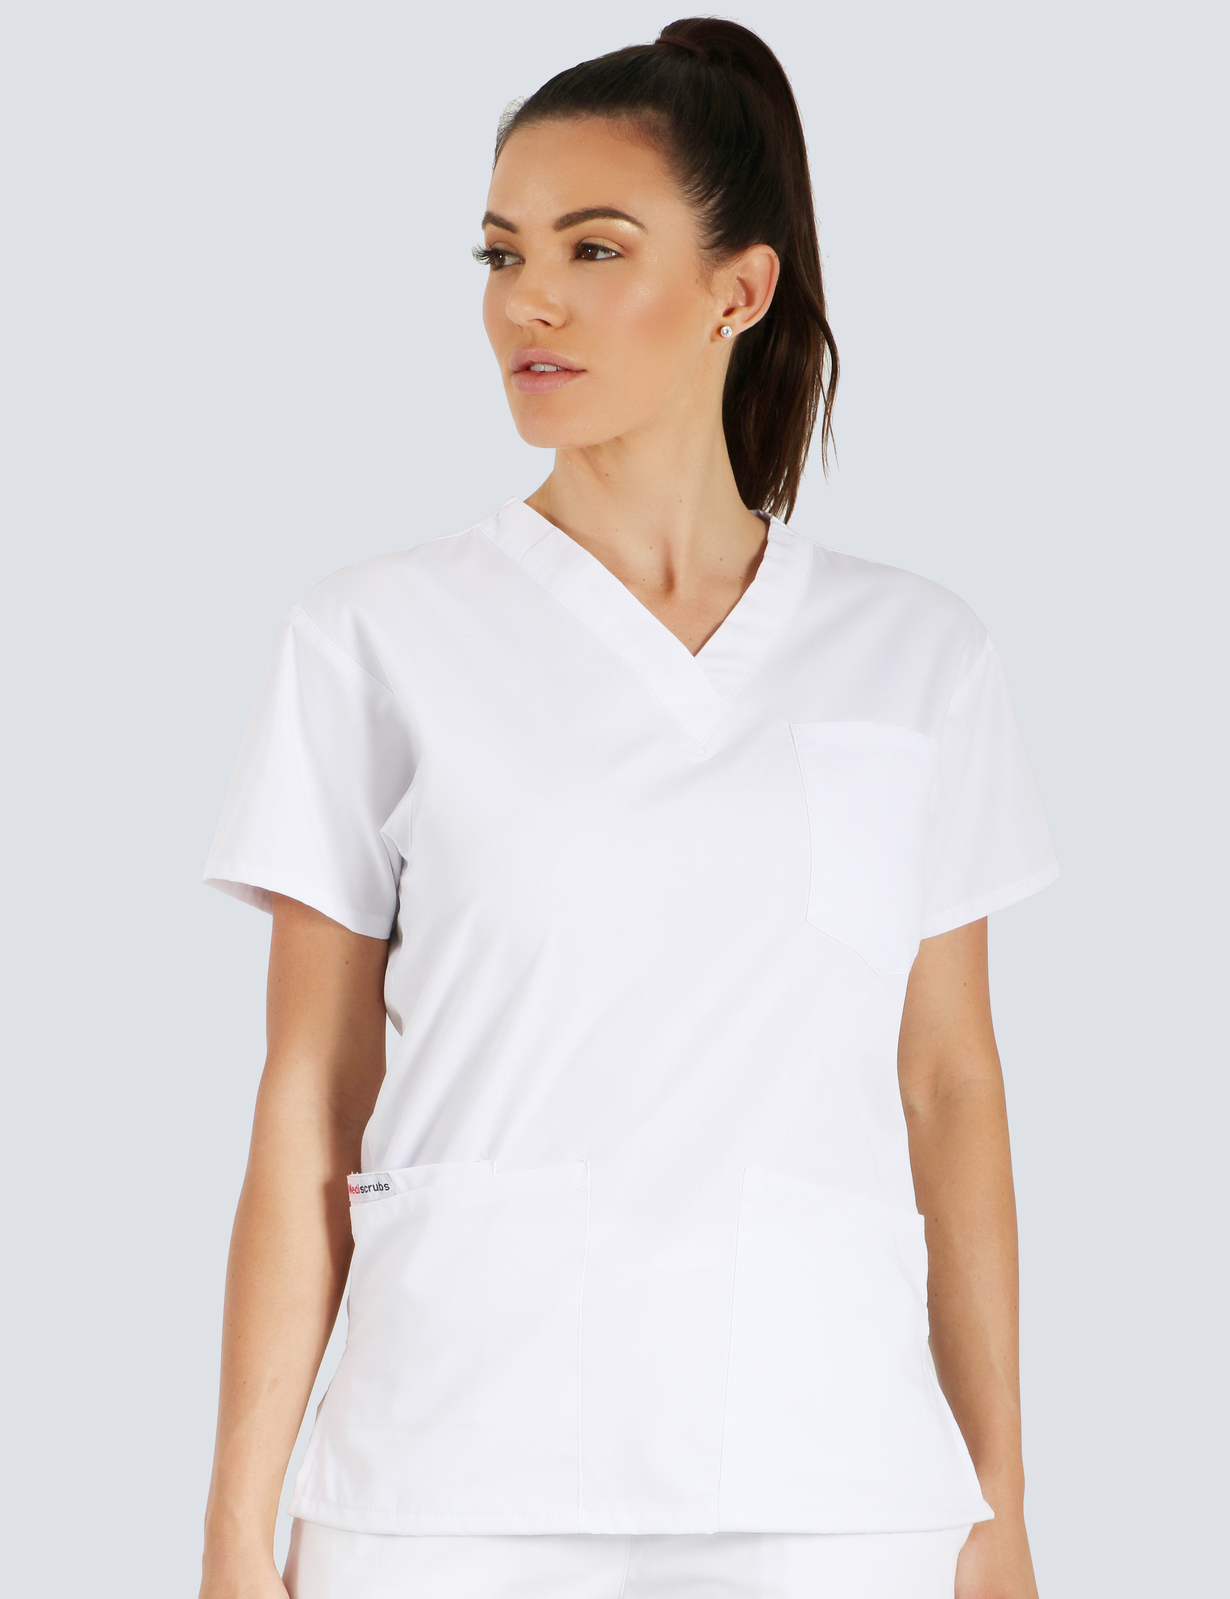 Queensland Children's Hospital Emergency Department Nurse Practitioner Uniform Top Bundle  (4 Pocket Top  in White  incl Logos)